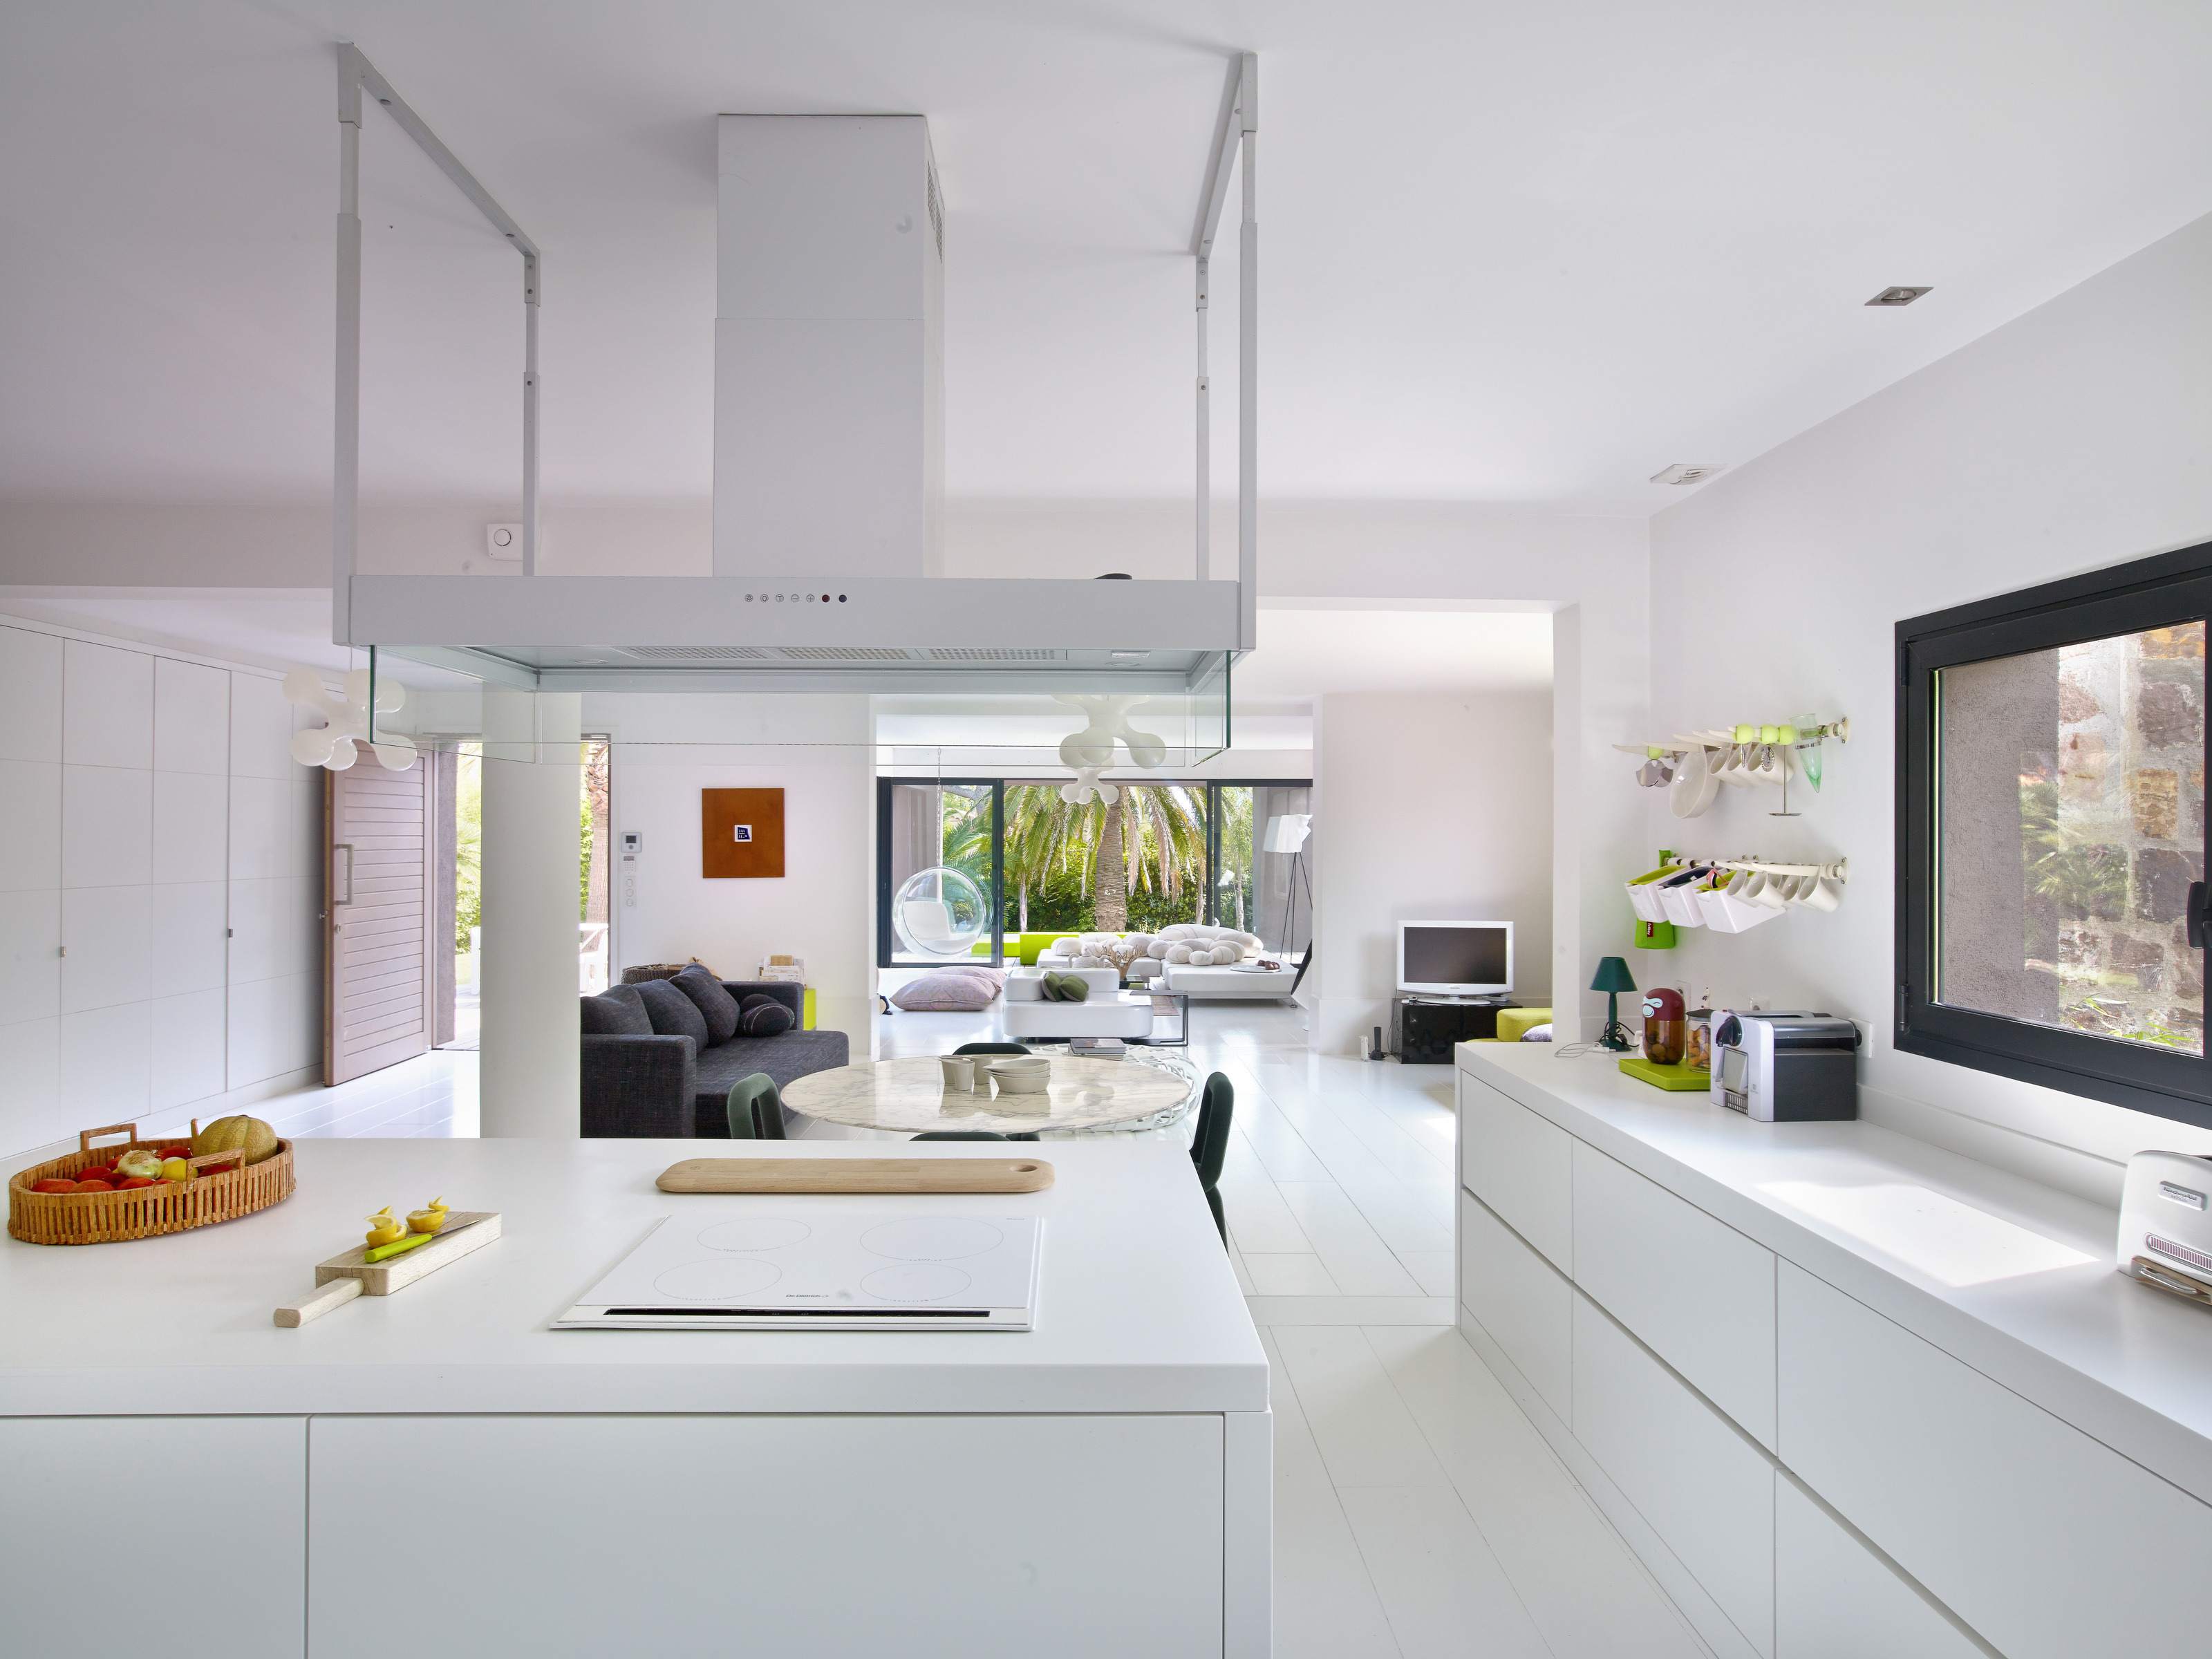 large-kitchen-ideas | Interior Design Ideas.